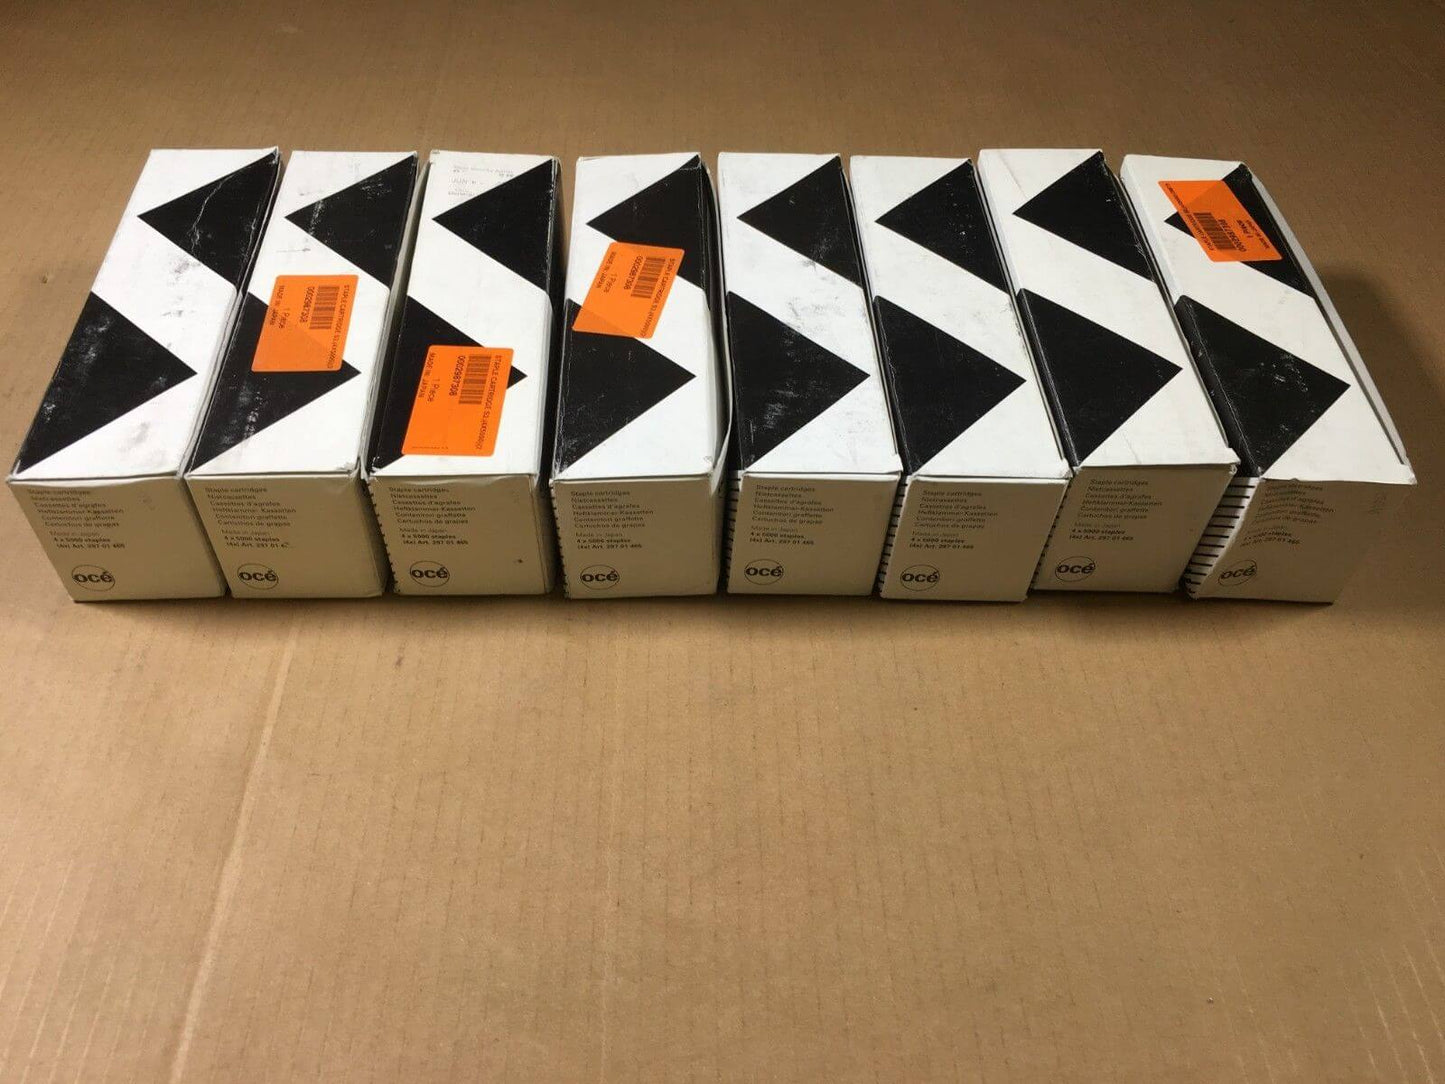 Lot of 8 Genuine Oce S2 Staple Cartridge Art. 29701465 FedEx 2Day Air!! - copier-clearance-center